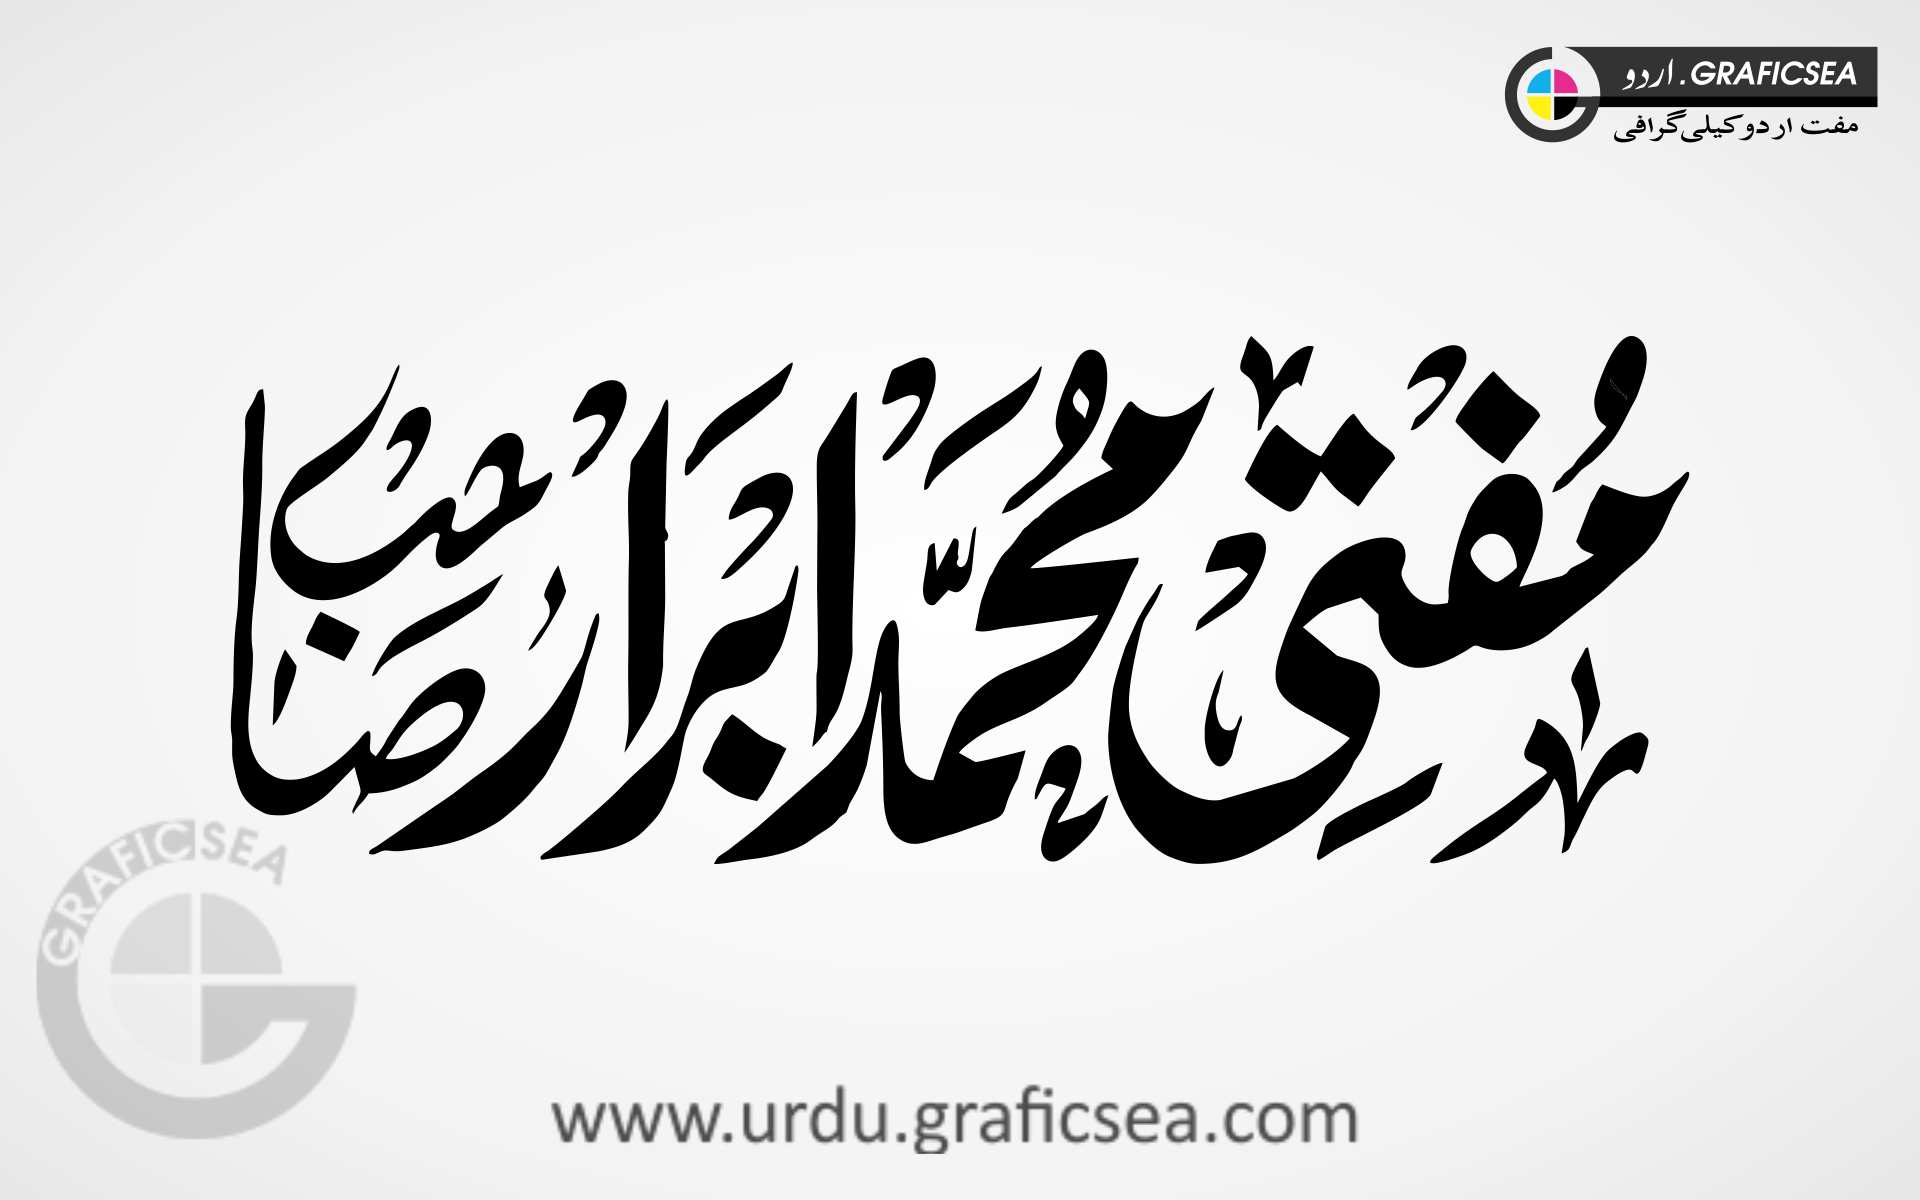 Mufti Muhammad Ibrar Name Urdu Calligraphy